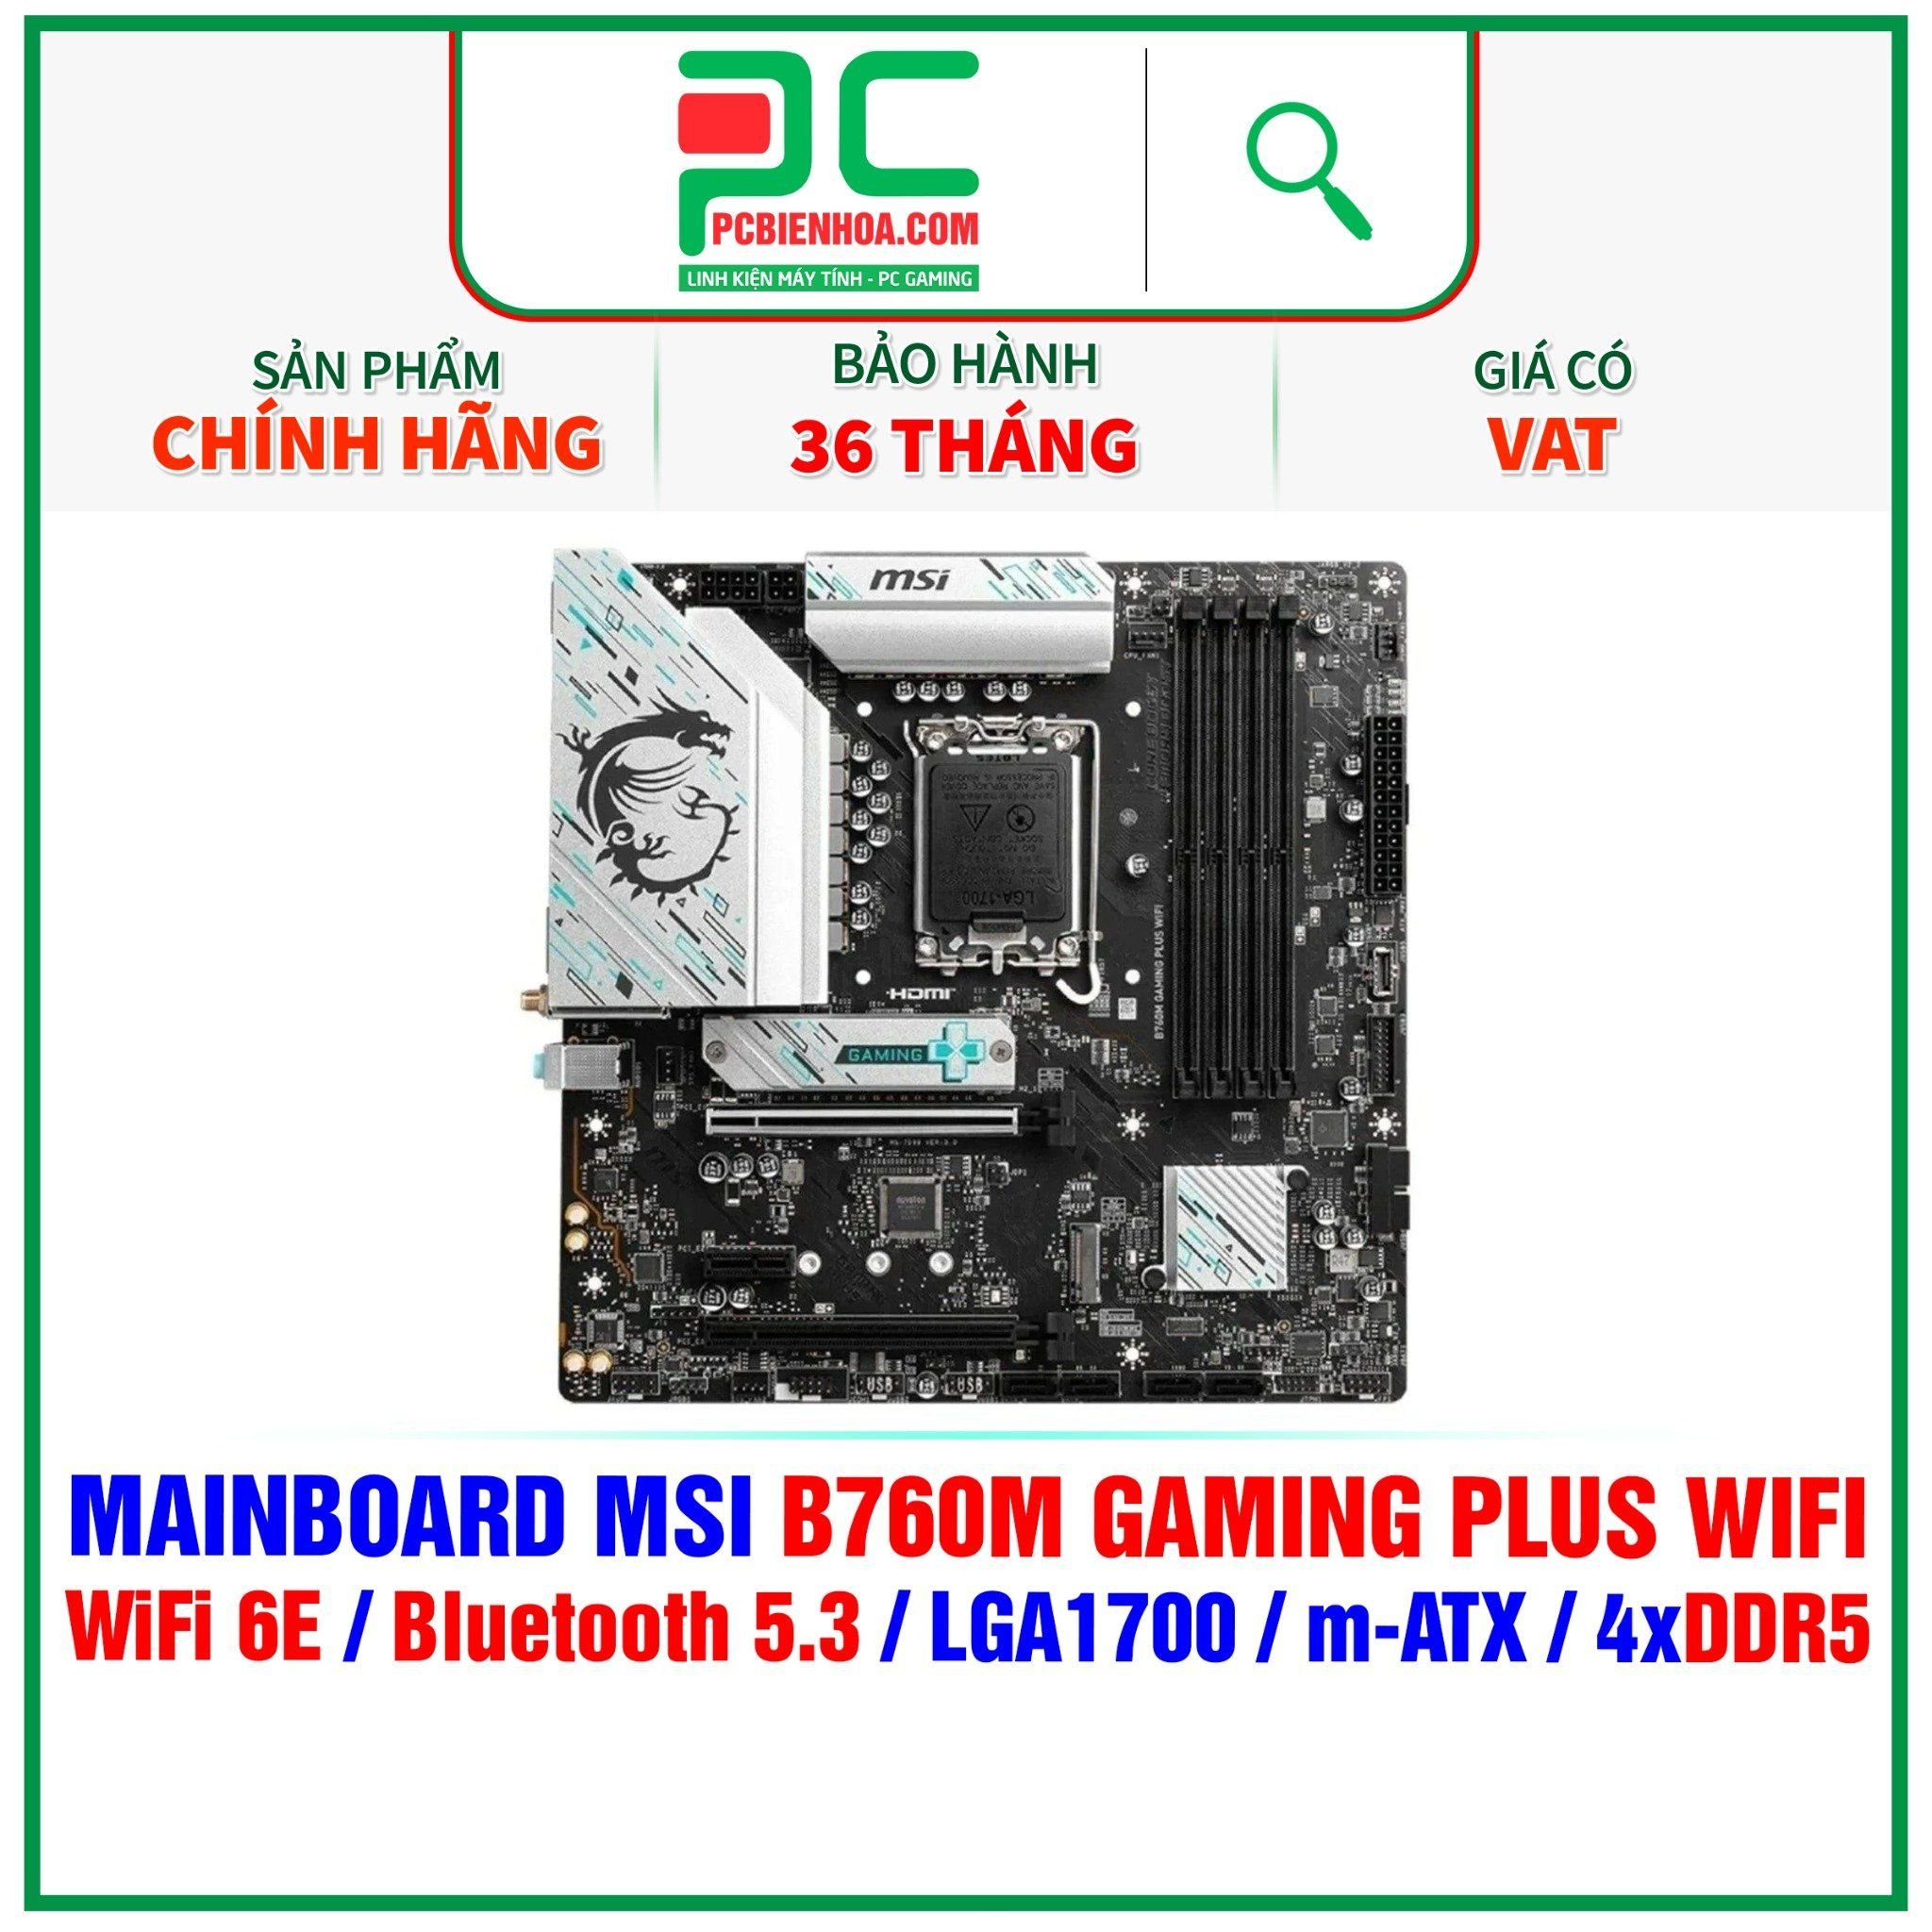  DDR5 - MAINBOARD MSI B760M GAMING PLUS WIFI ( WiFi 6E / Bluetooth 5.3 / LGA1700 / m-ATX / 4xDDR5 ) 